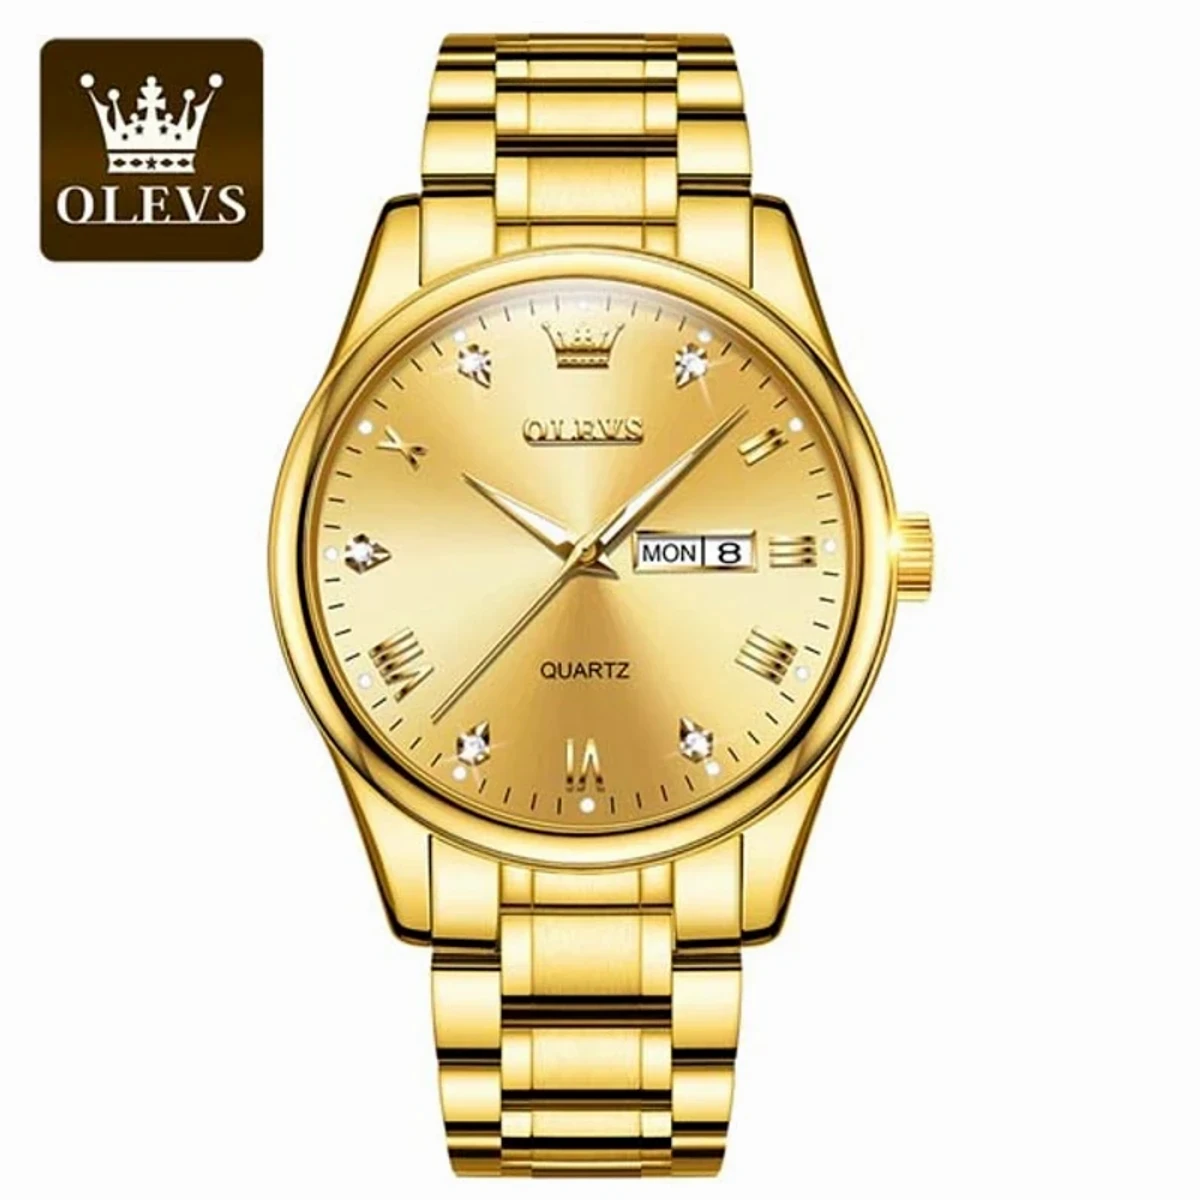 Top Brand OLEVS 5563 MODEL FULL GOLDEN COLOUR WATCH FOR MAN